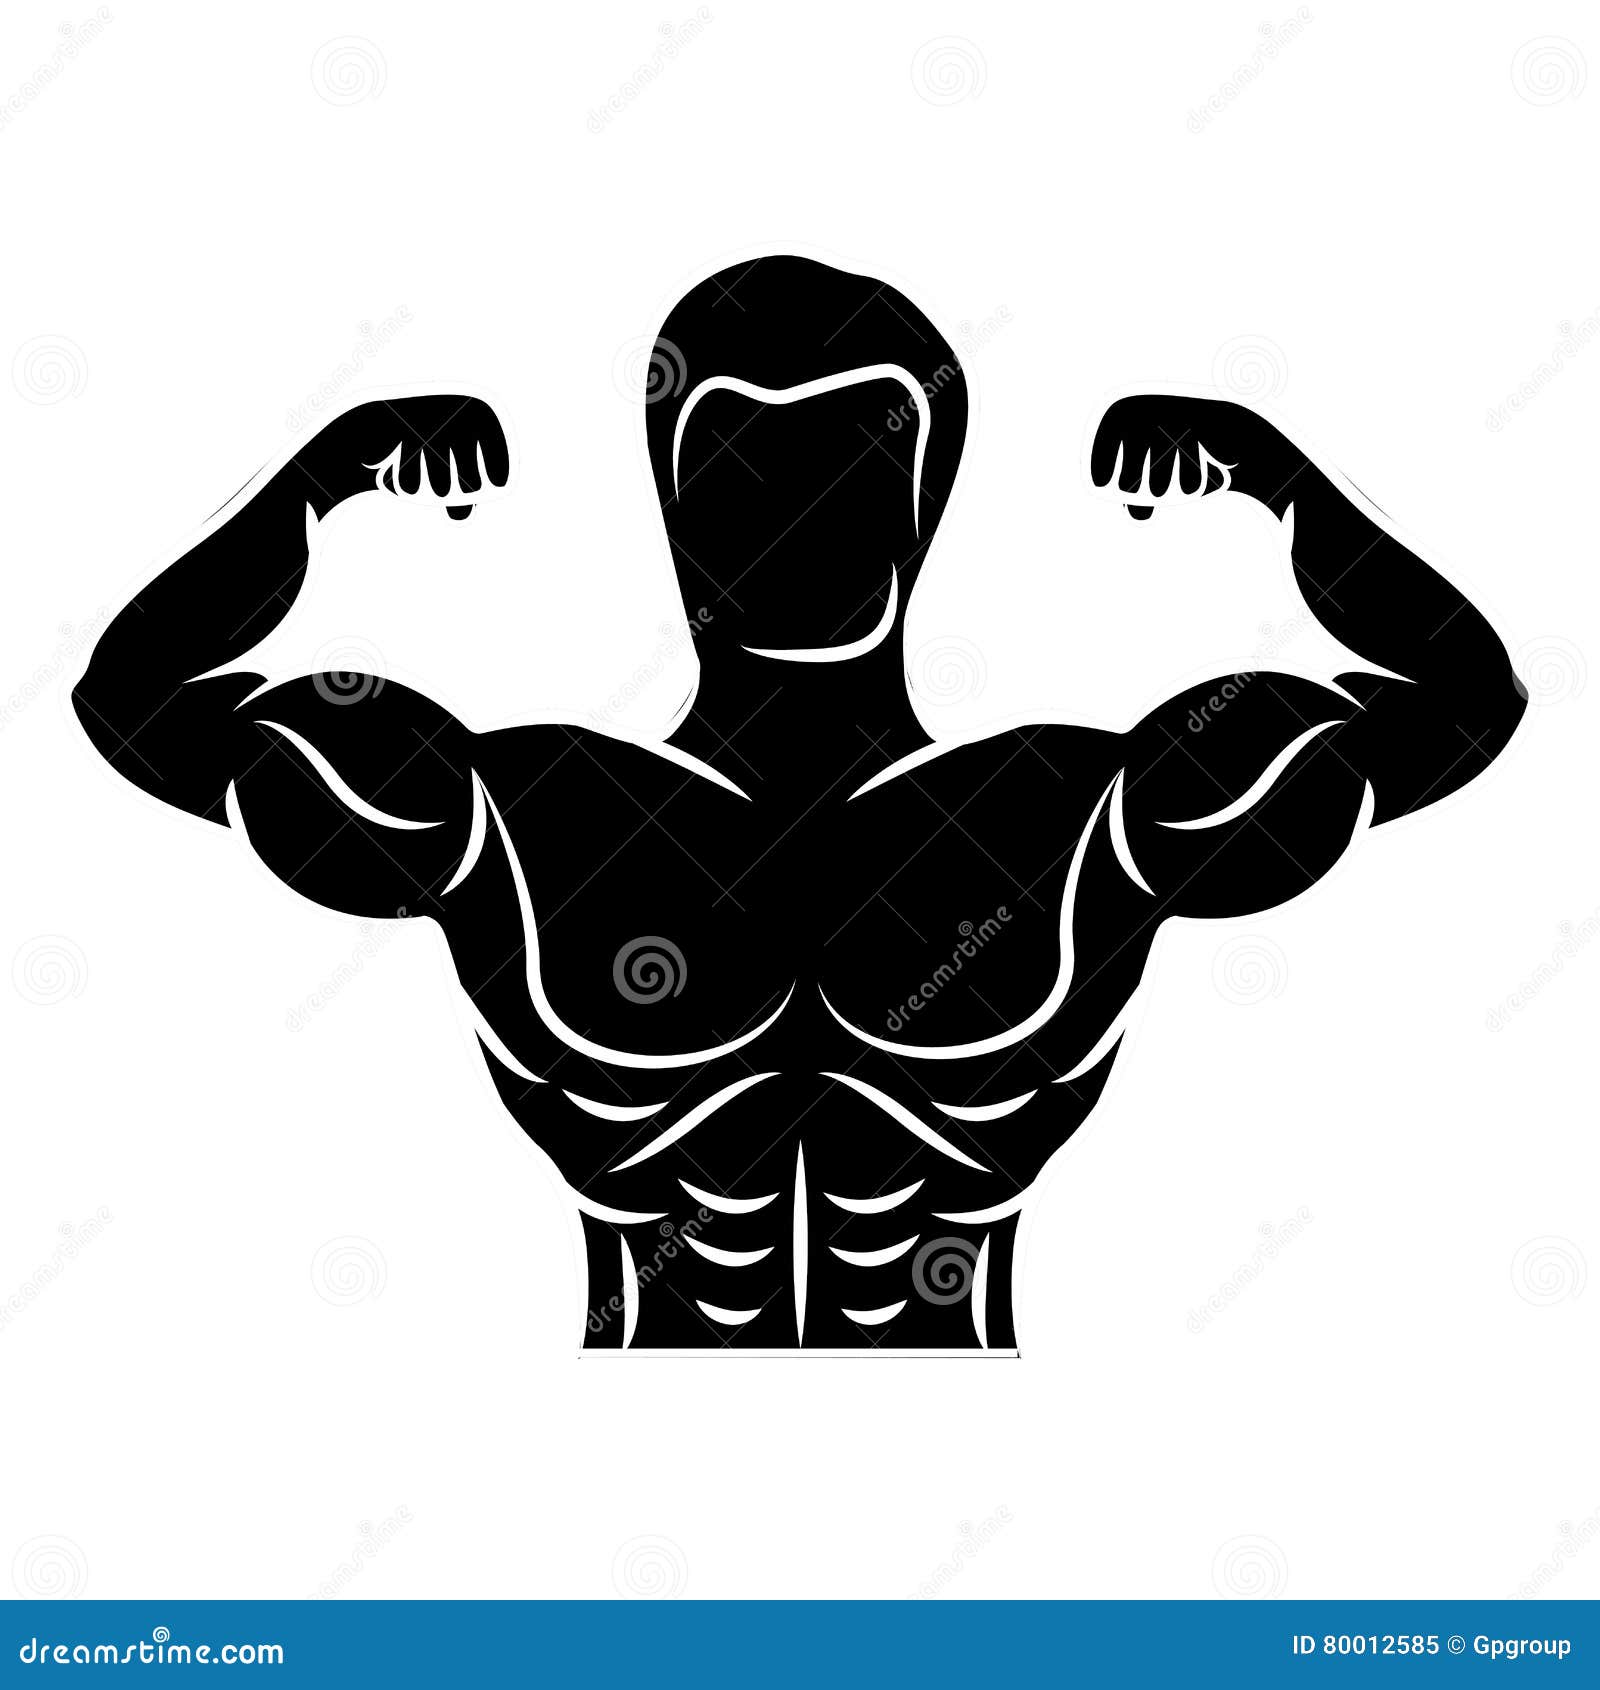 Bodybuilding muscle design stock vector. Illustration of head - 80012585